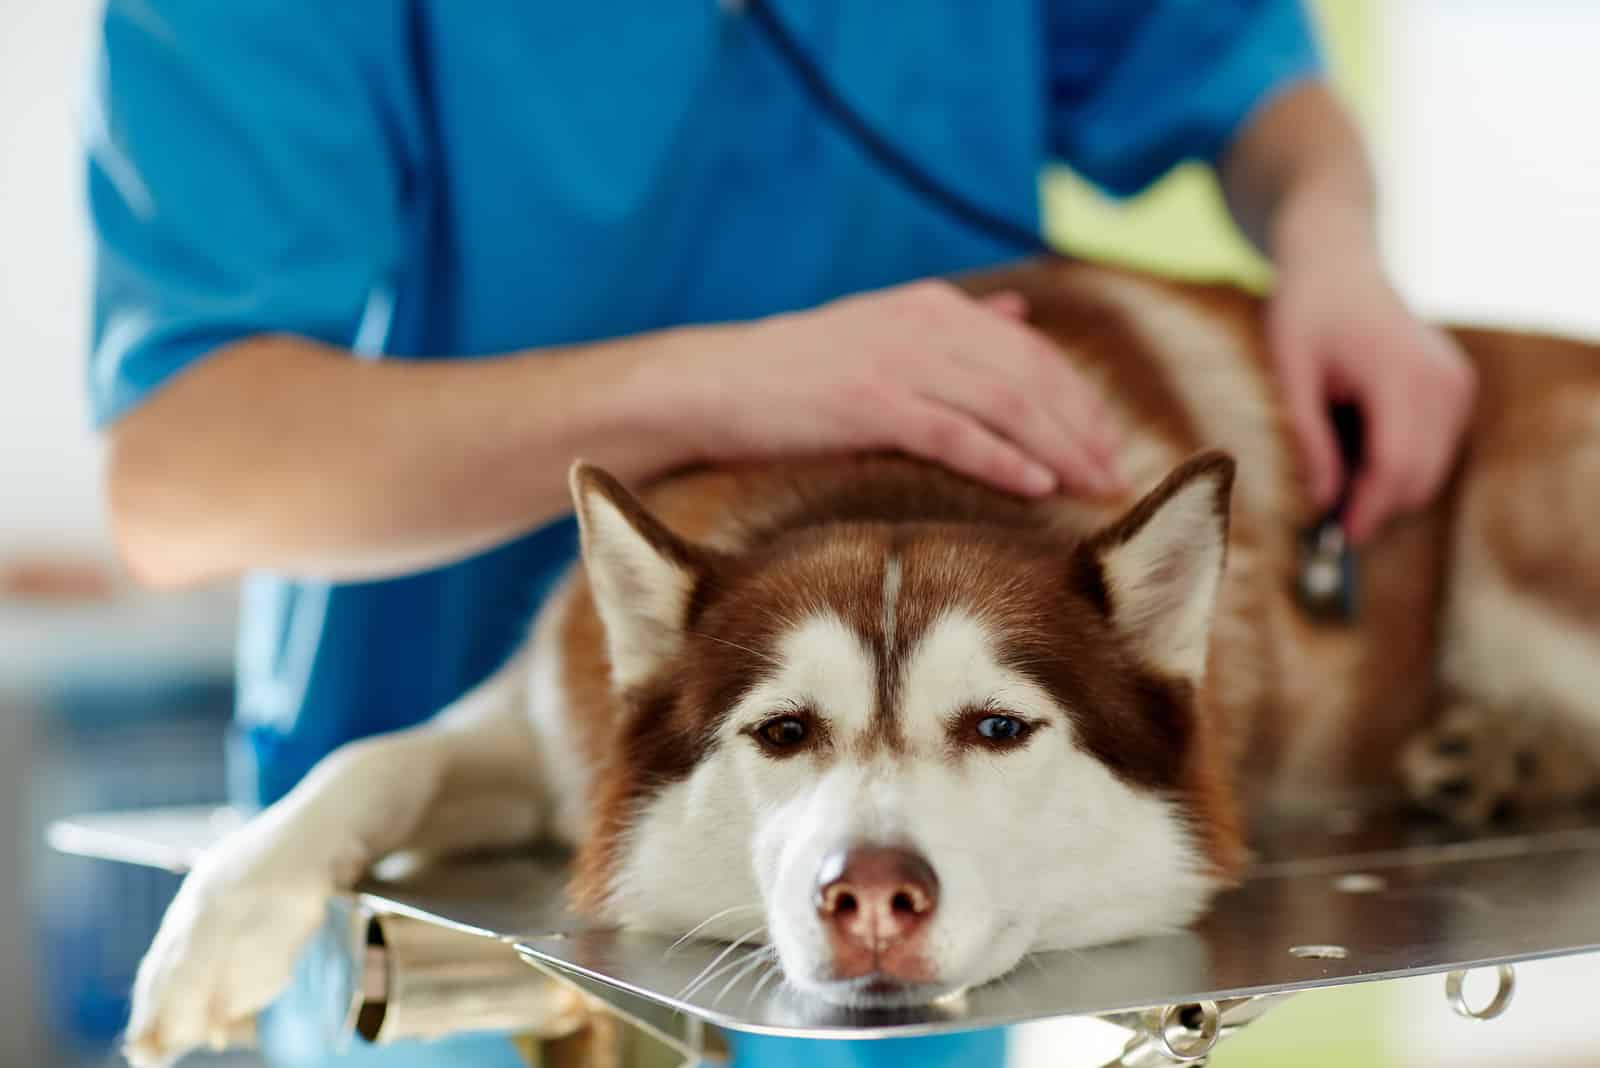 Medical treatment of sick husky dog in vet clinic